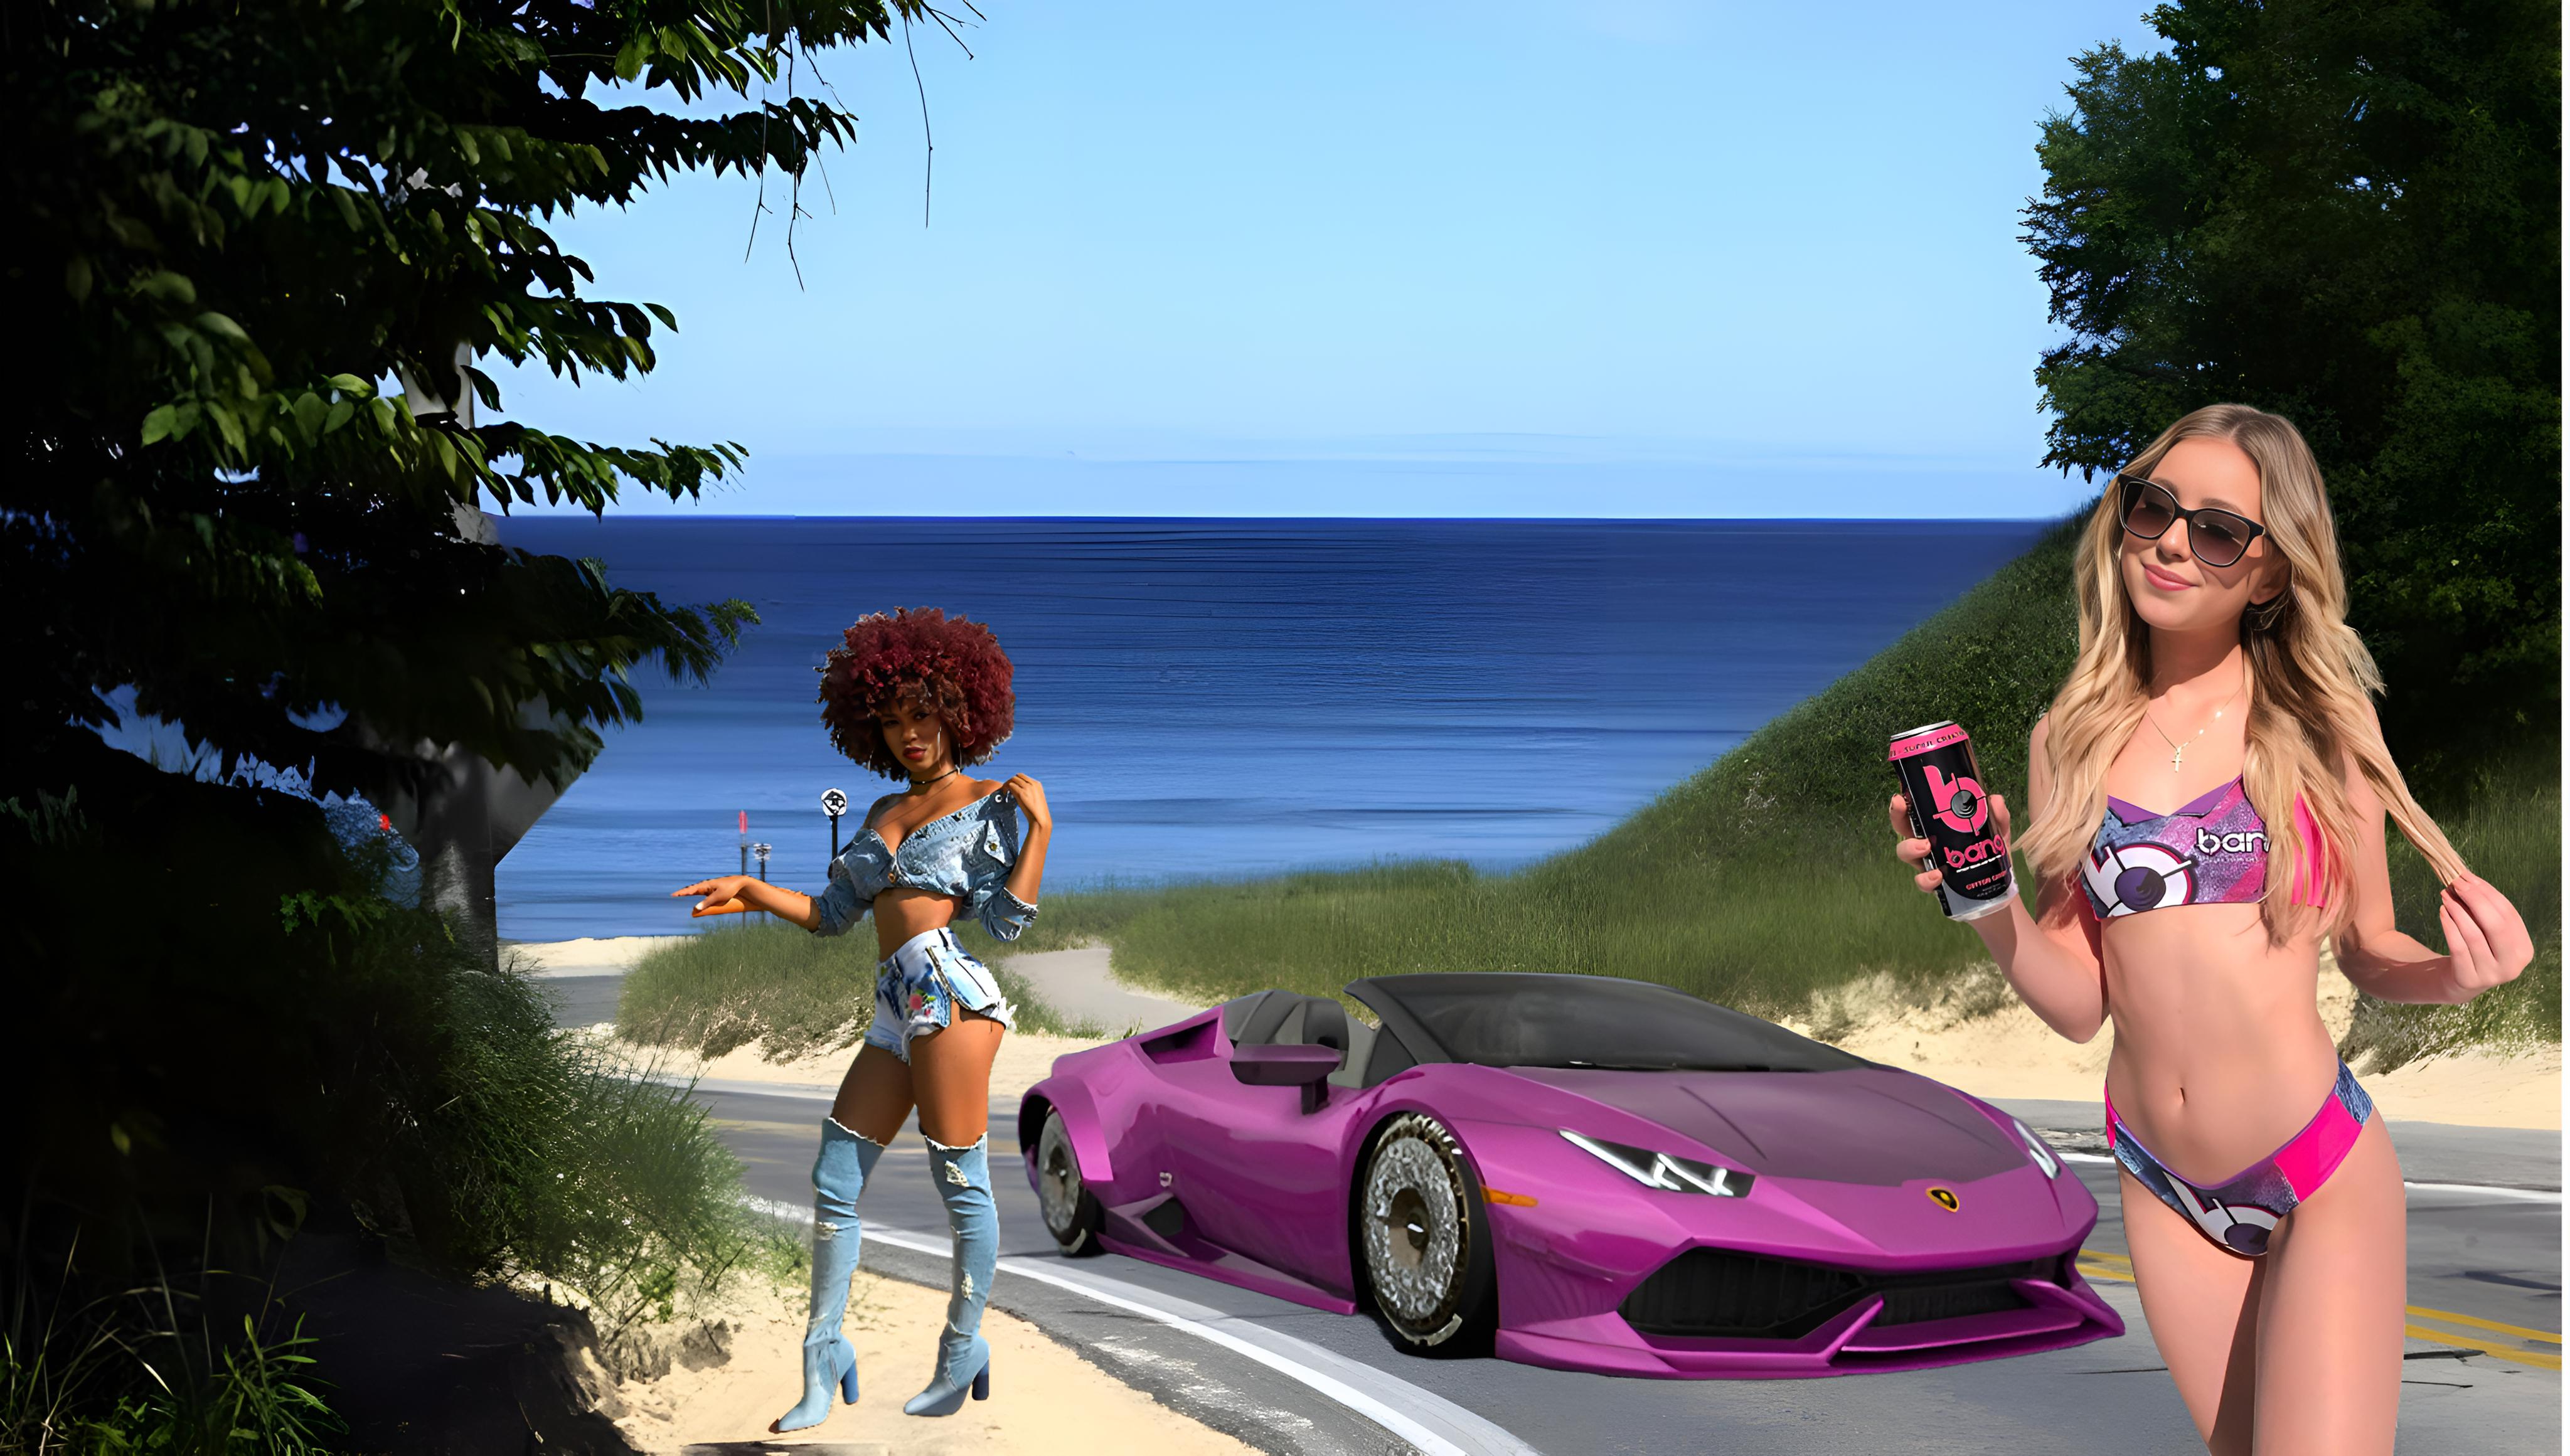 Women With Cars Lamborghini Huracan Pink Cars 4096x2321